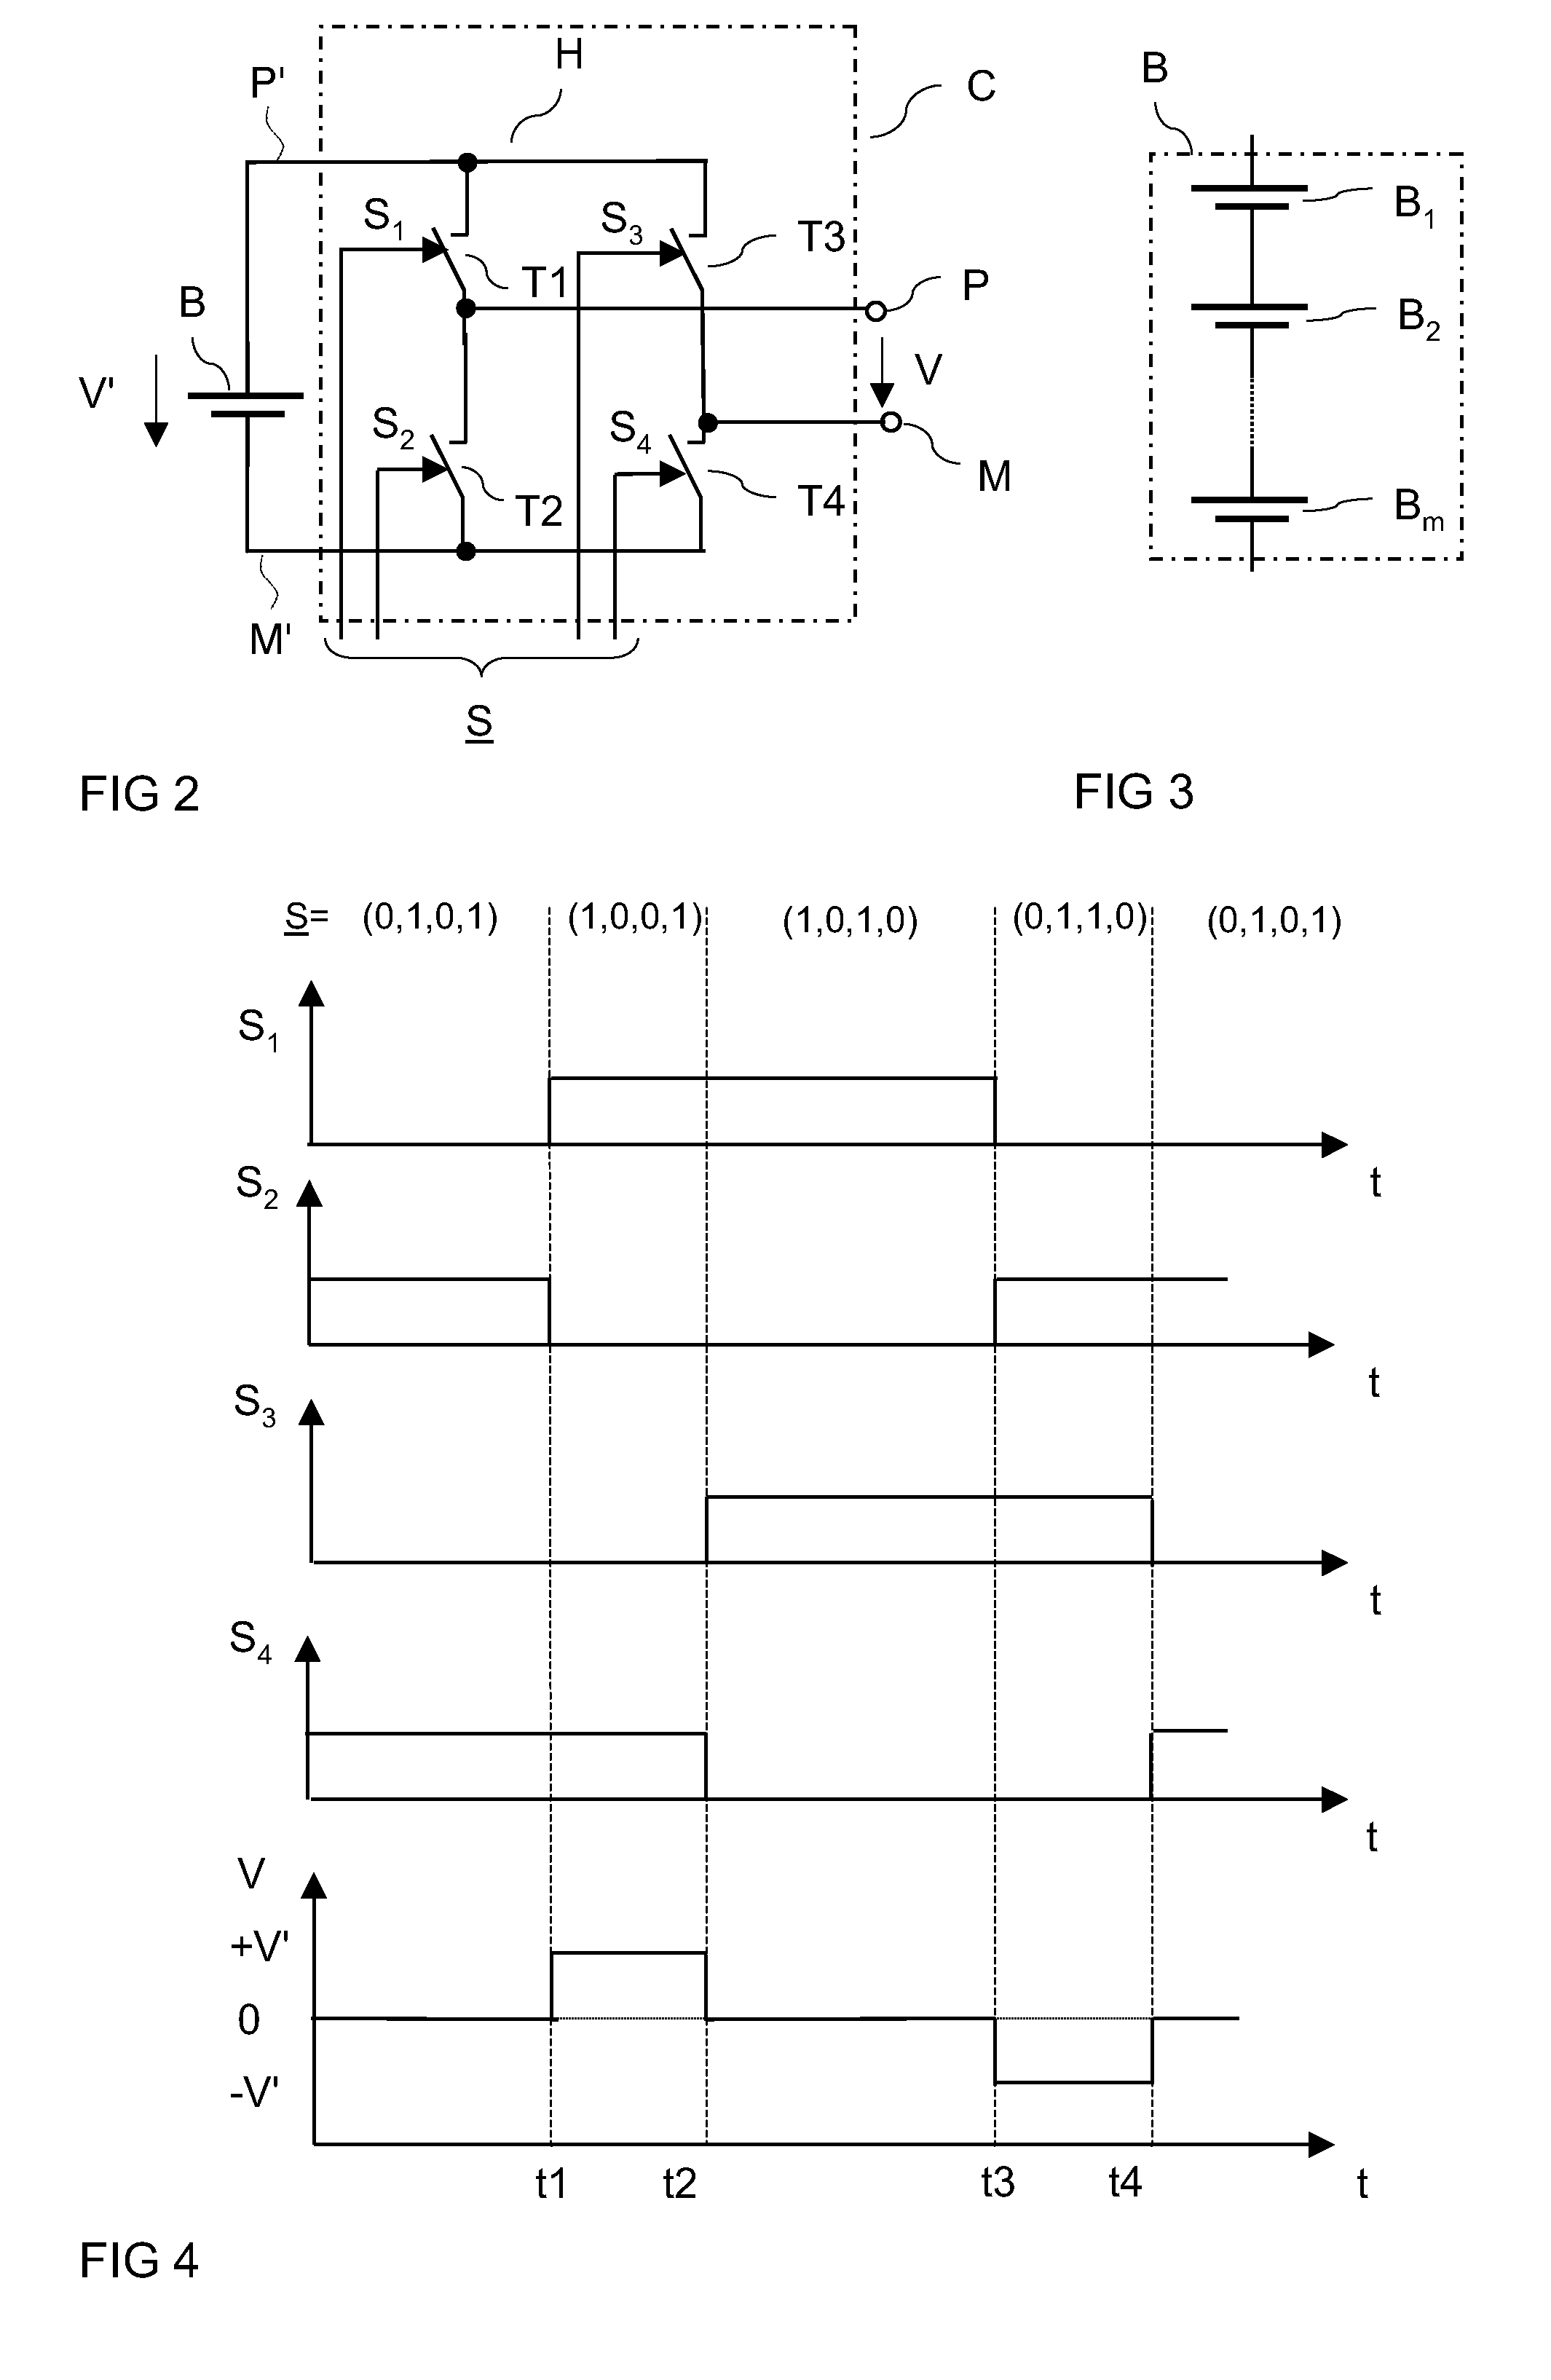 Circuit Arrangement Including a Multi-Level Converter